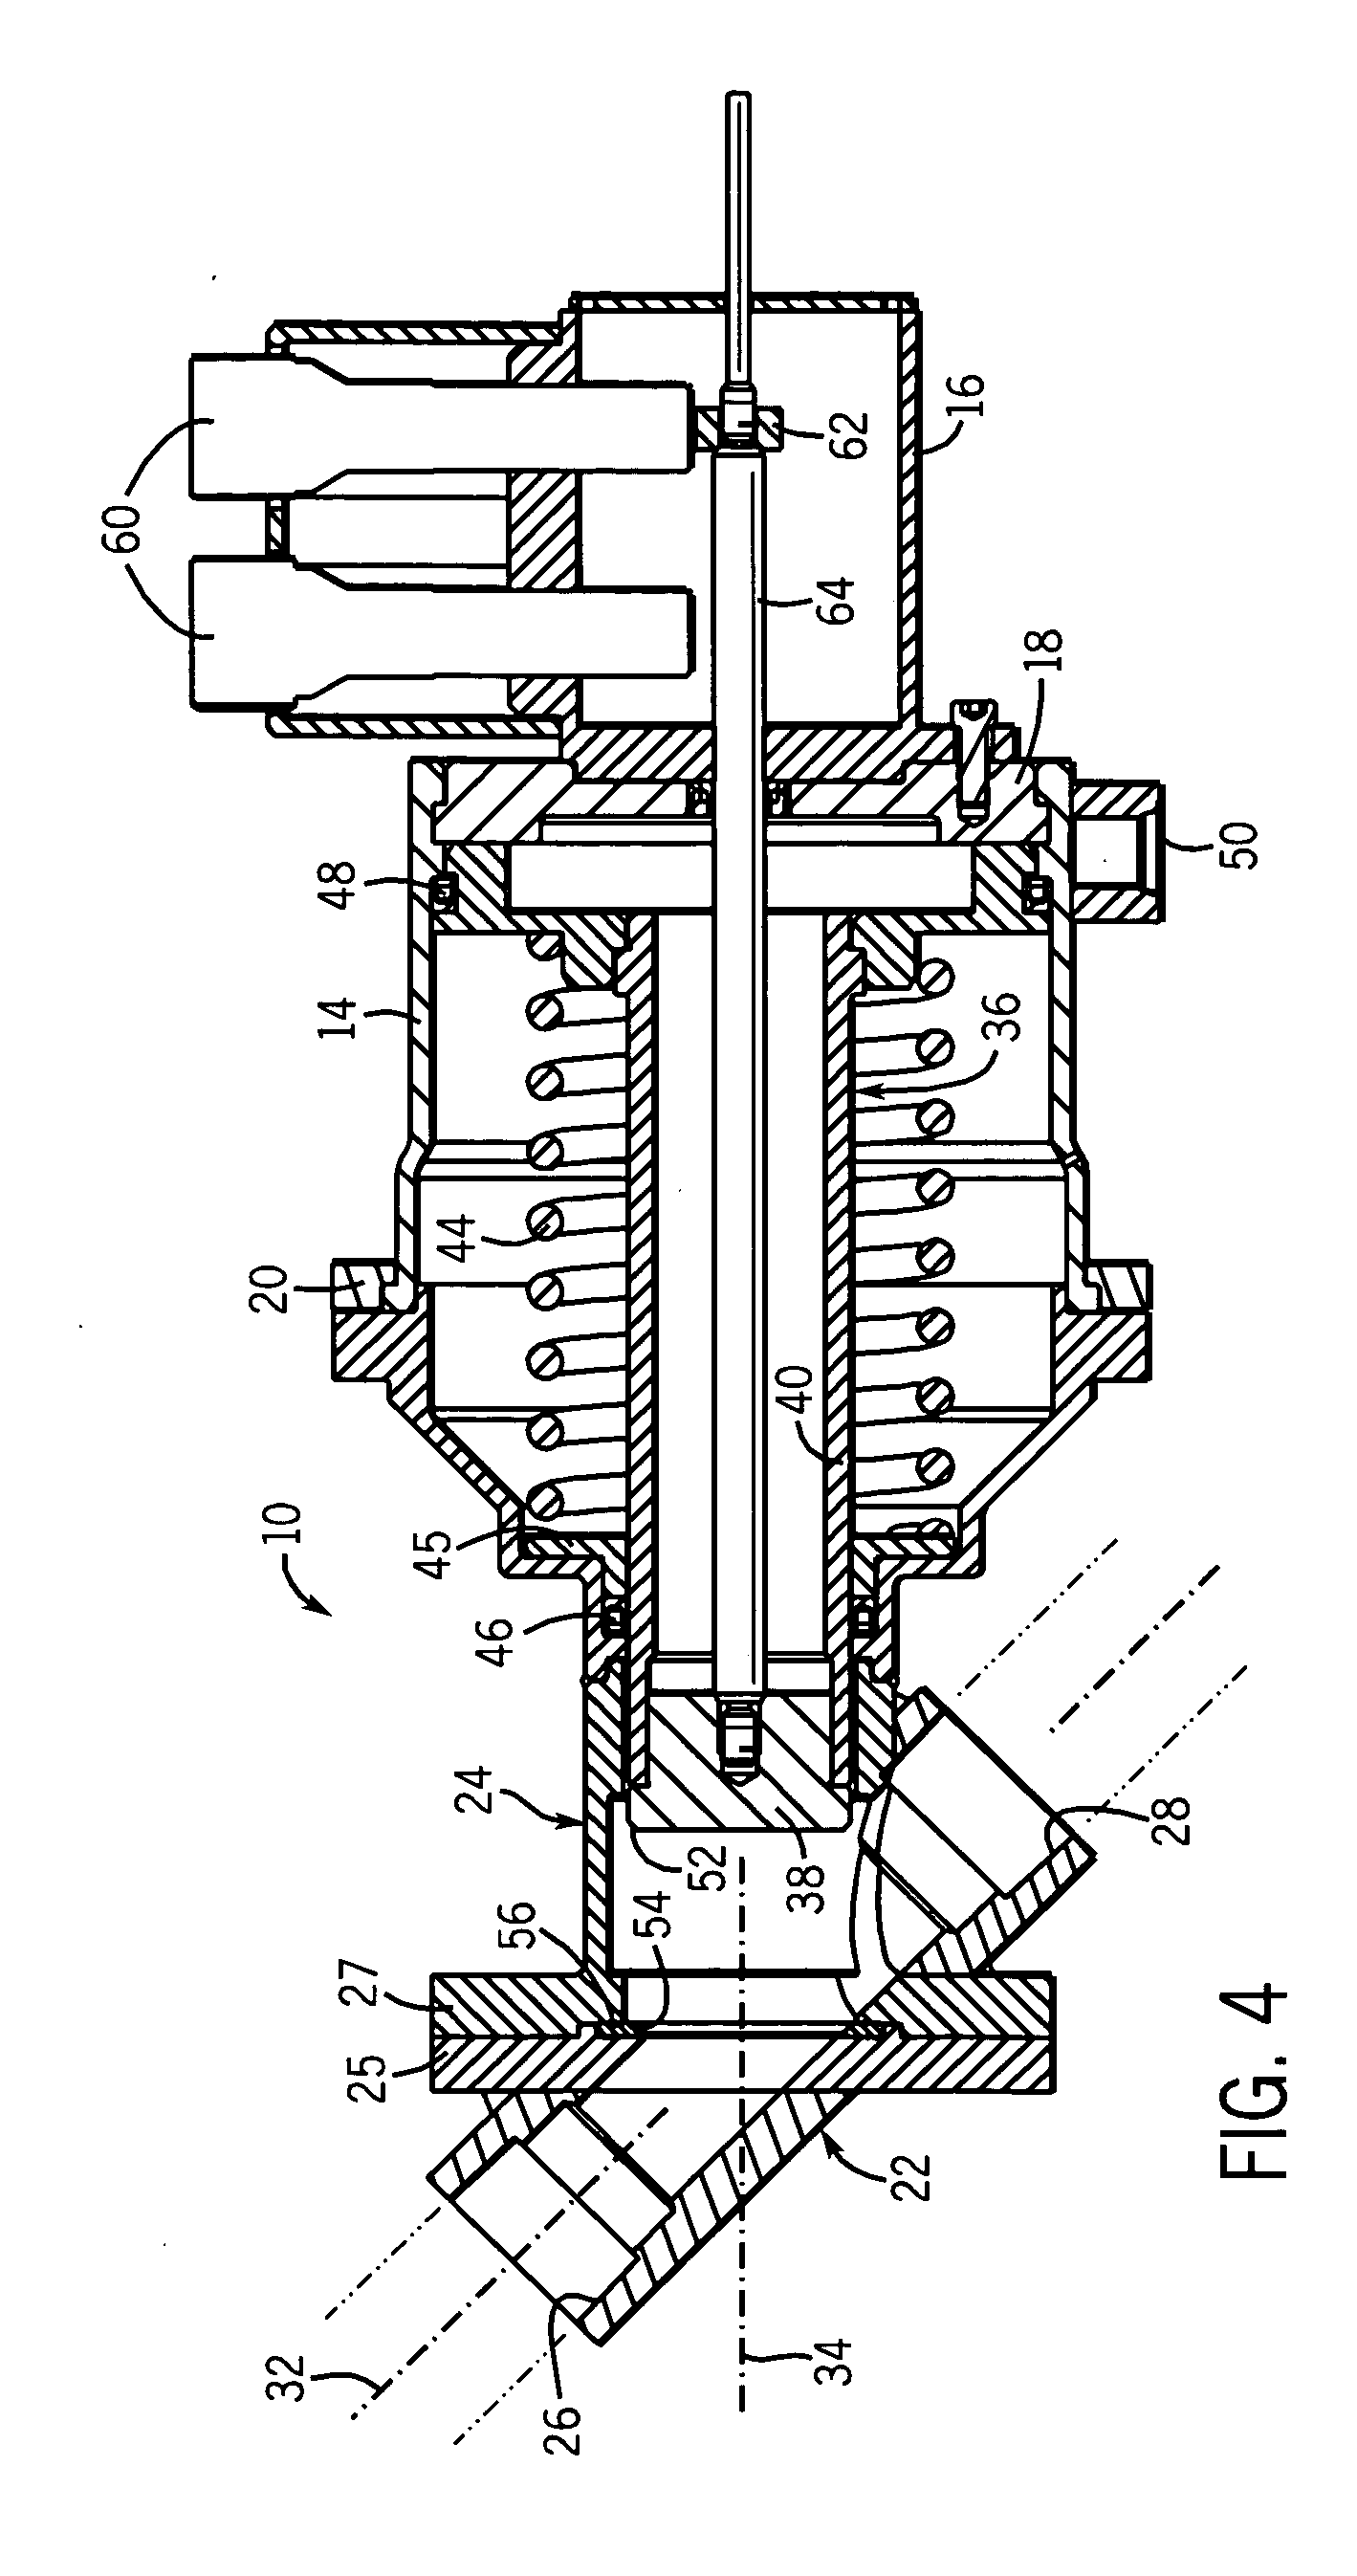 Combustor drain valve